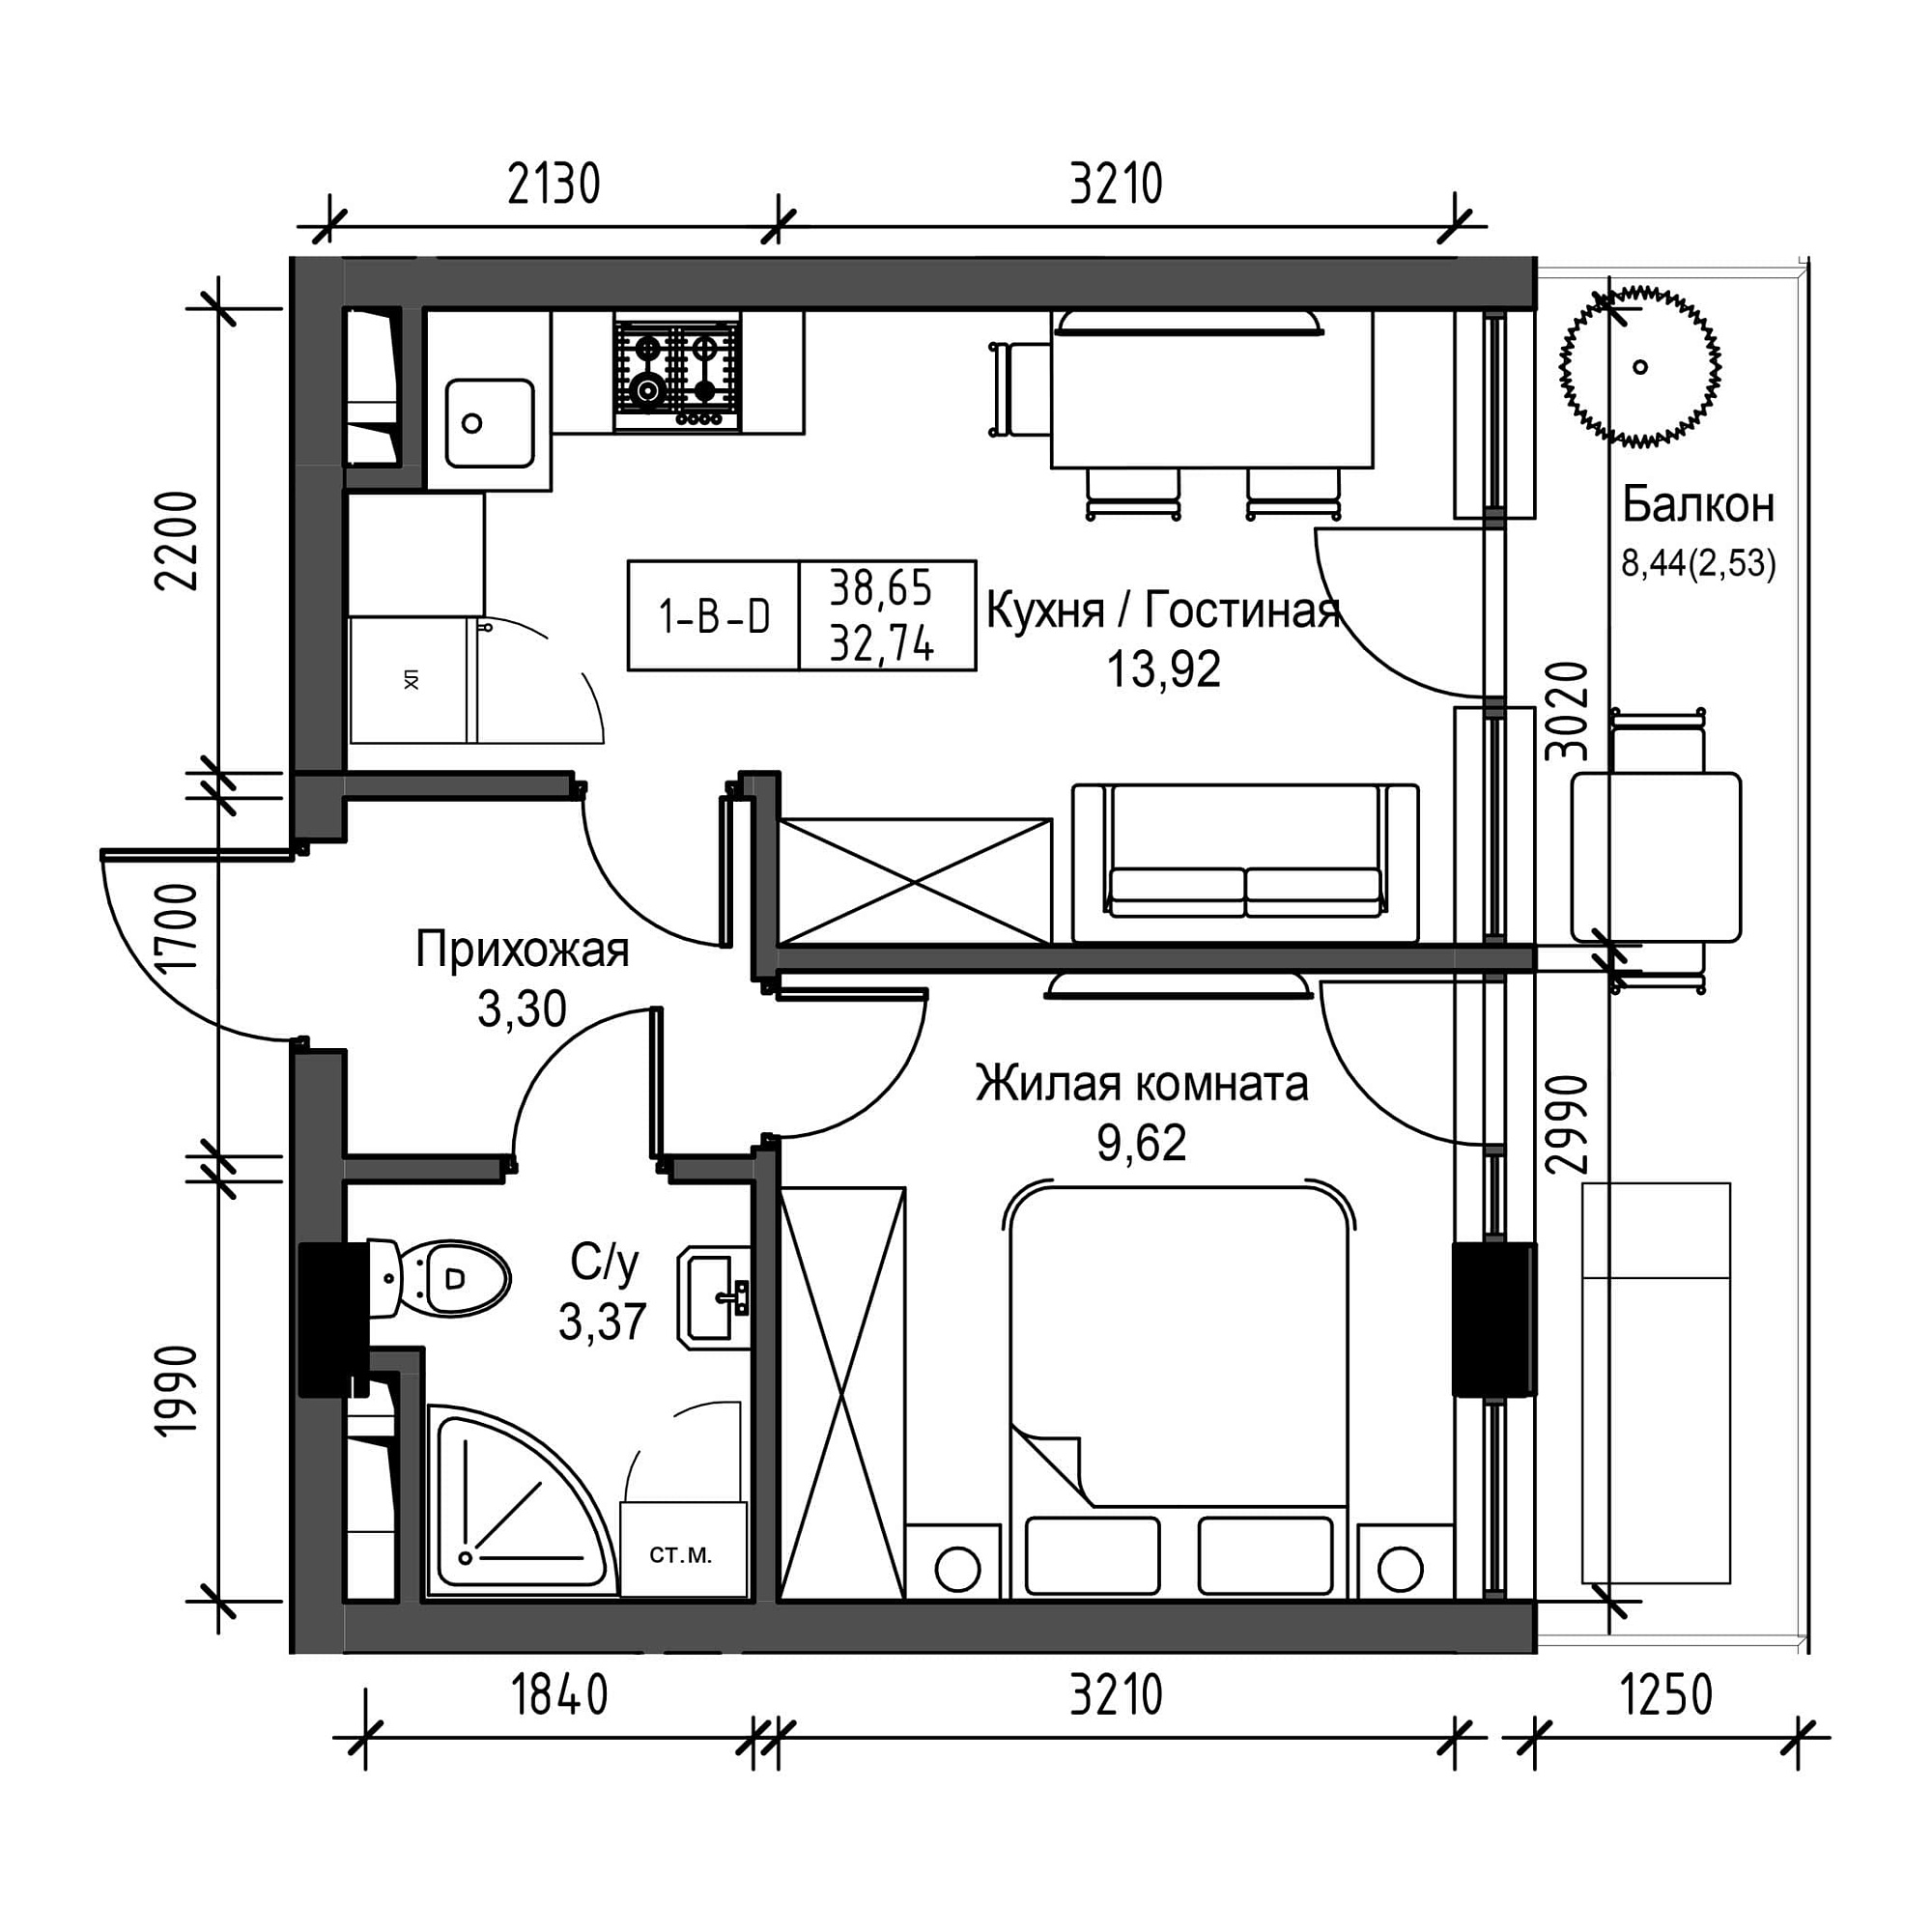 Планування 1-к квартира площею 32.74м2, UM-001-06/0022.